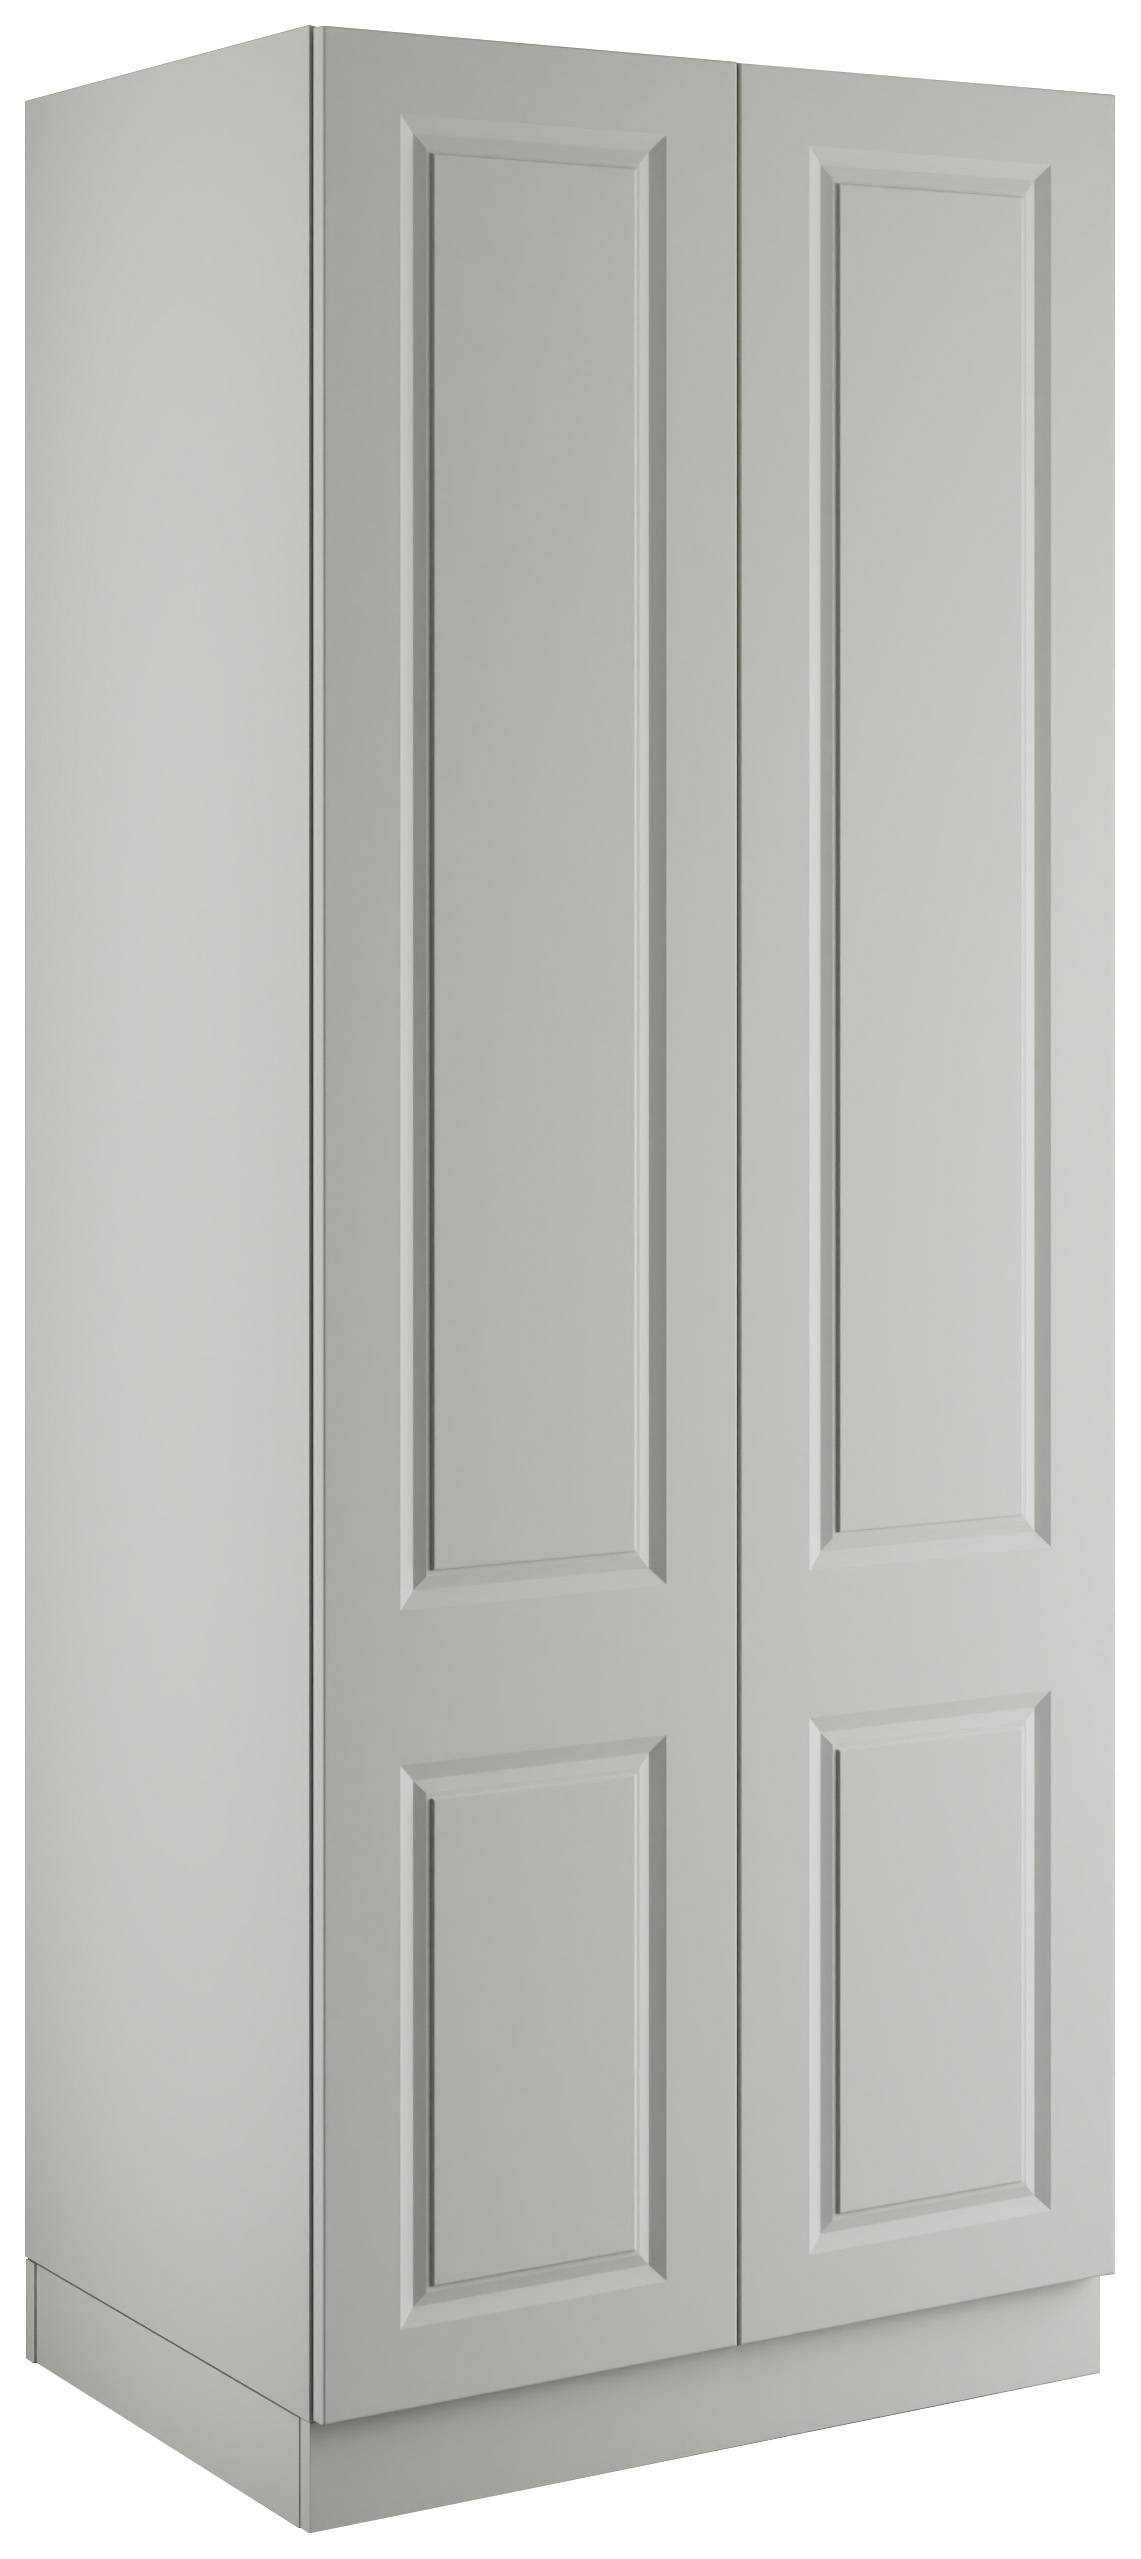 Harrogate Light Grey Double Wardrobe with Single Rail & Internal Drawers - 900 x 2260 x 608mm